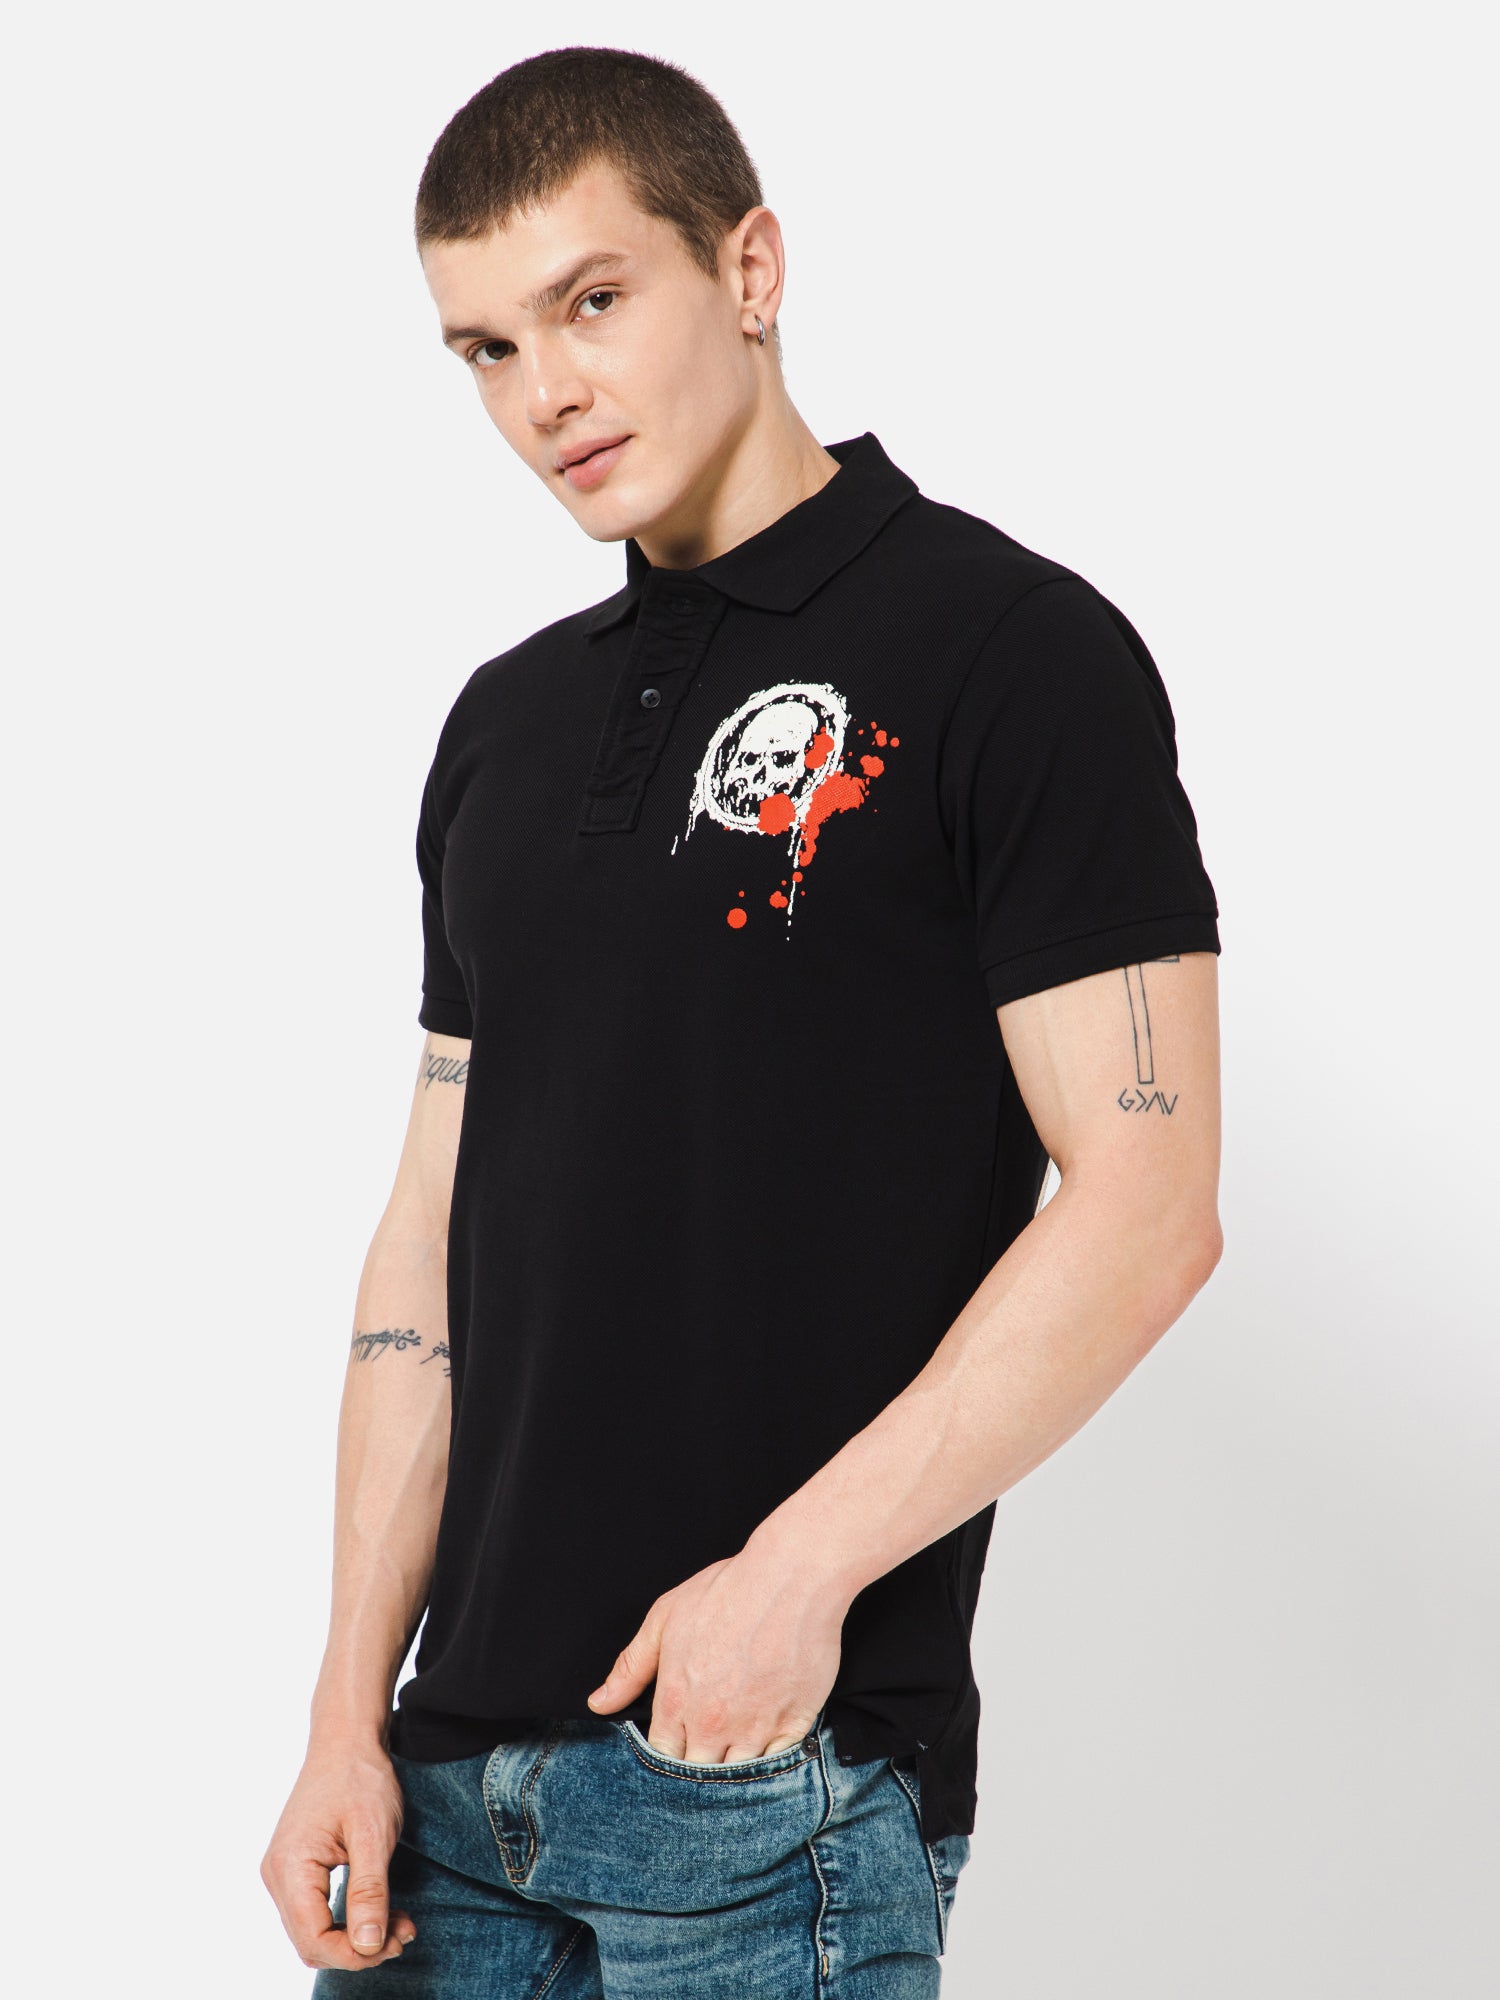 Punk Polo Collar GOTHIC Black Printed T shirt